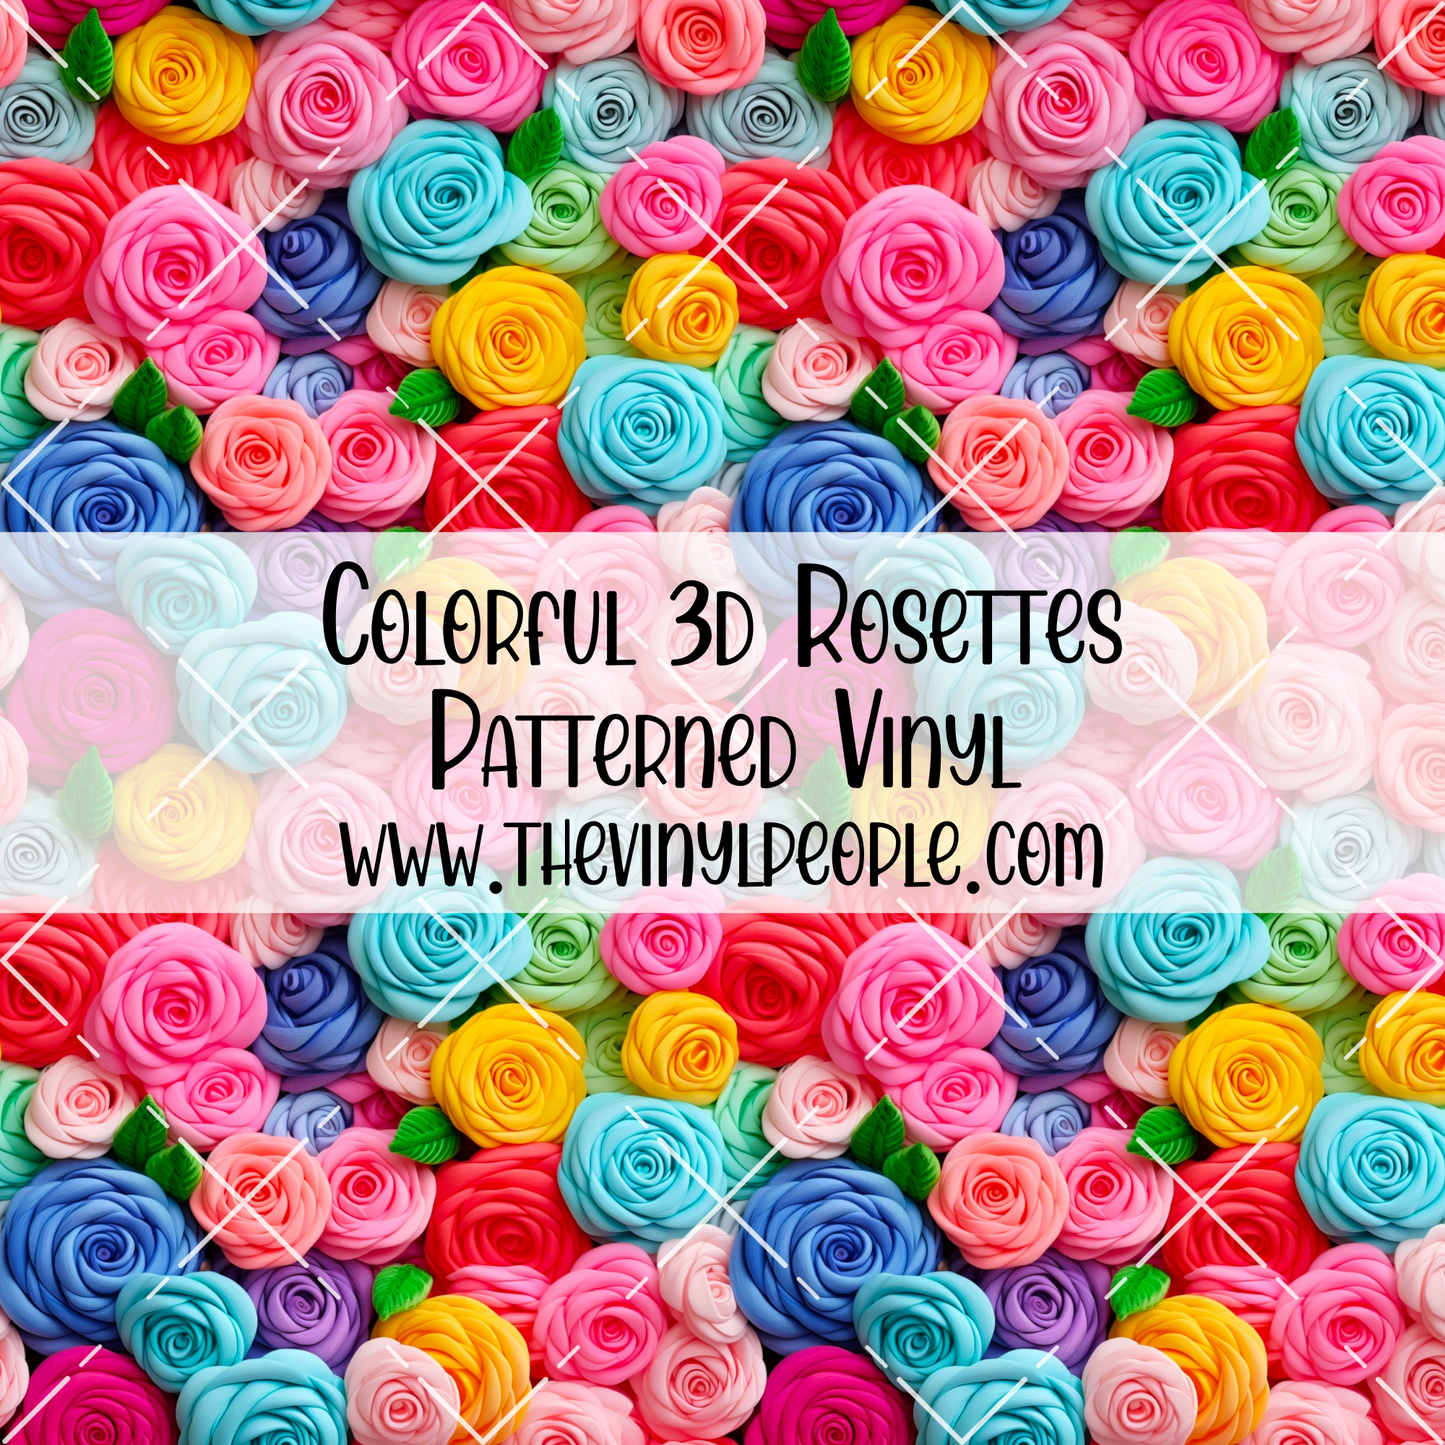 Colorful 3D Rosettes Patterned Vinyl